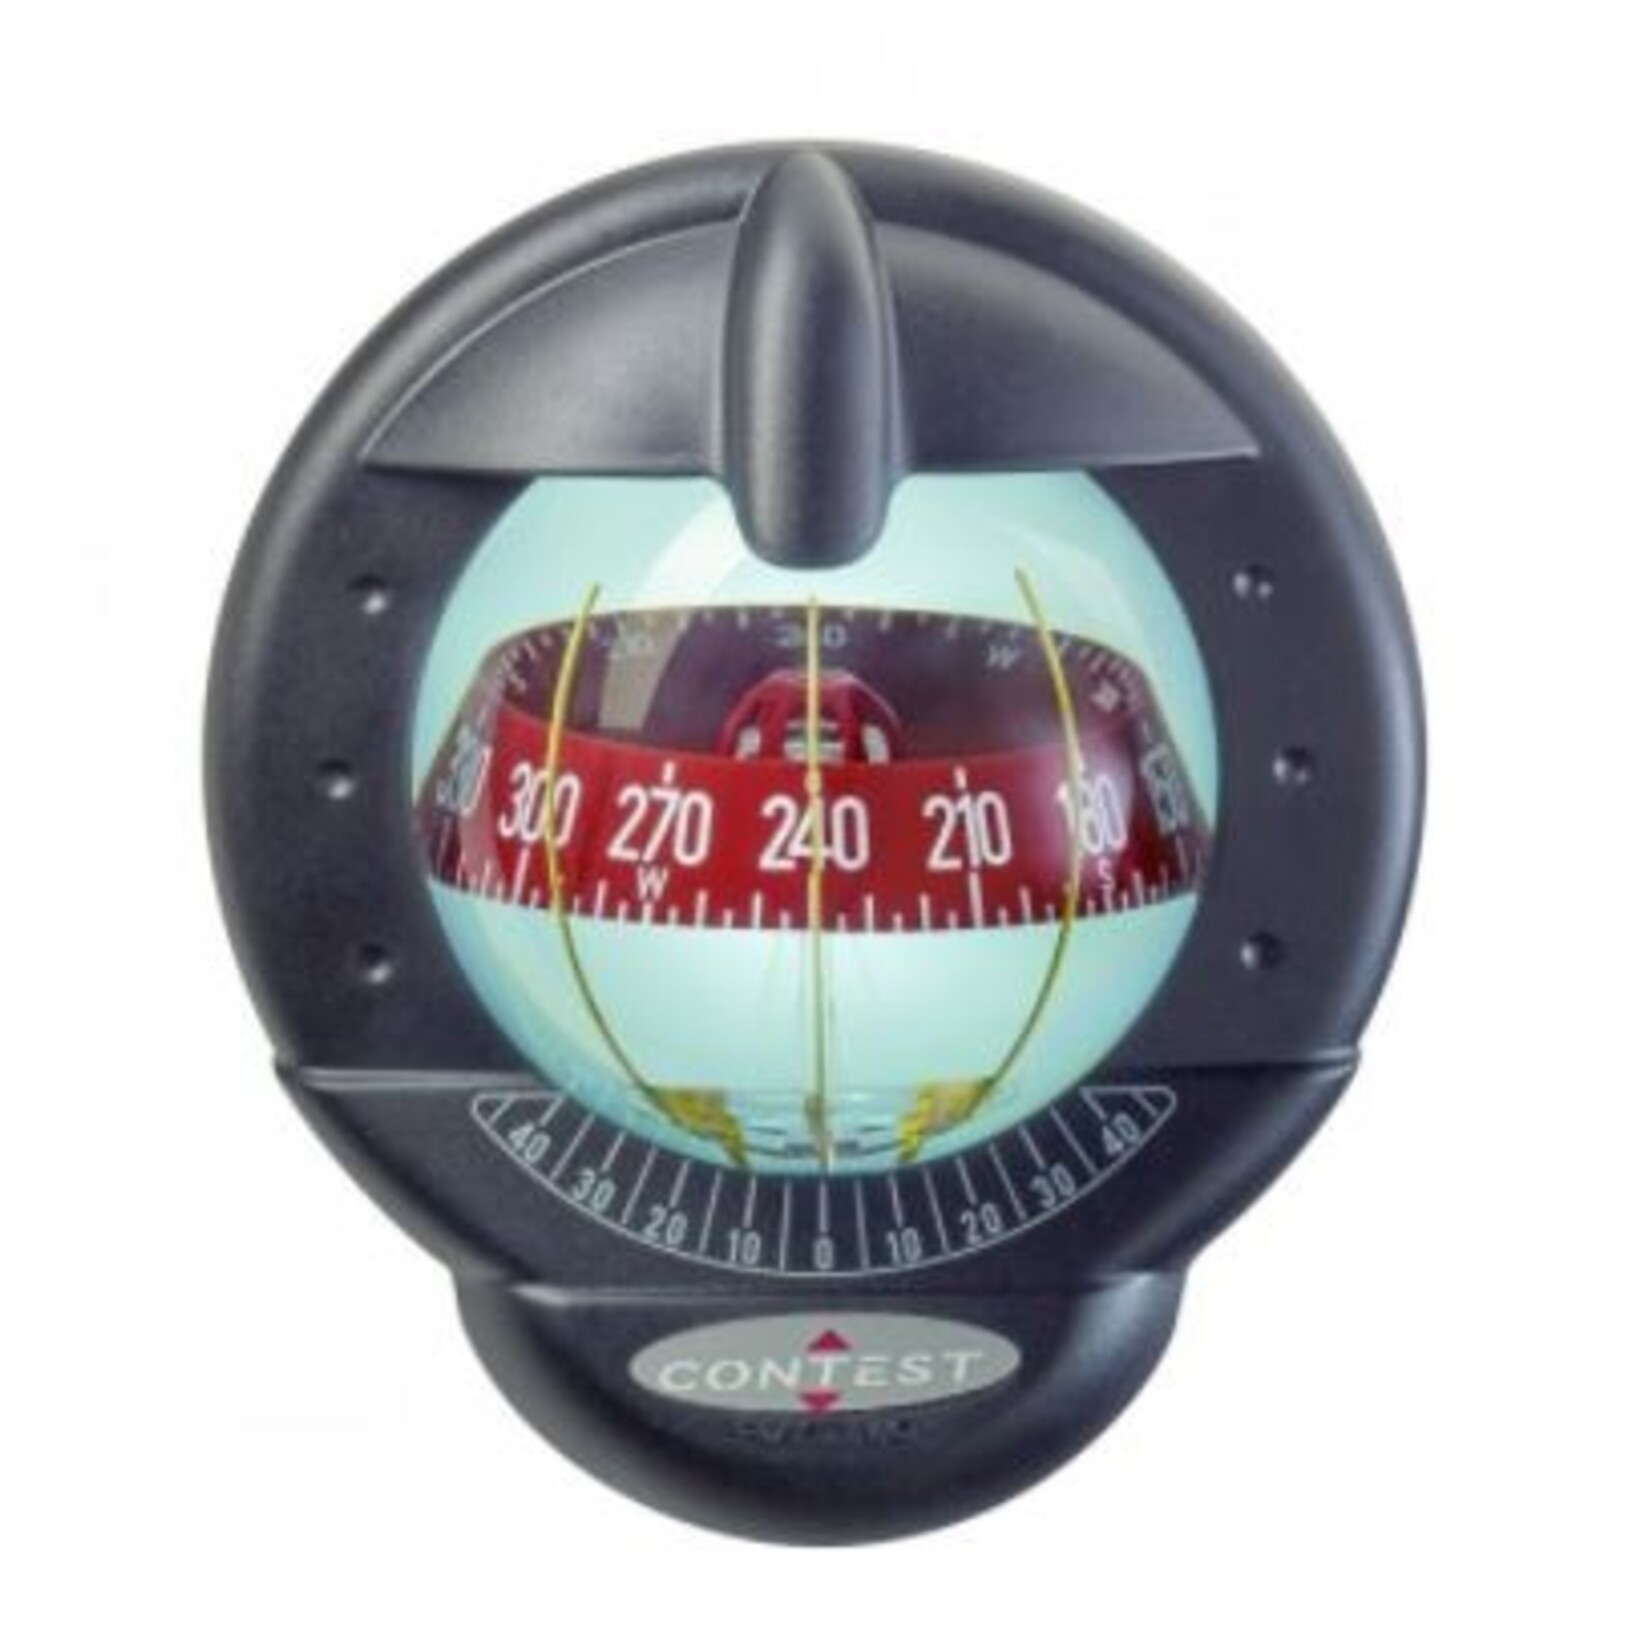 Plastimo Compass contest 101 black/red 15dg z/abc